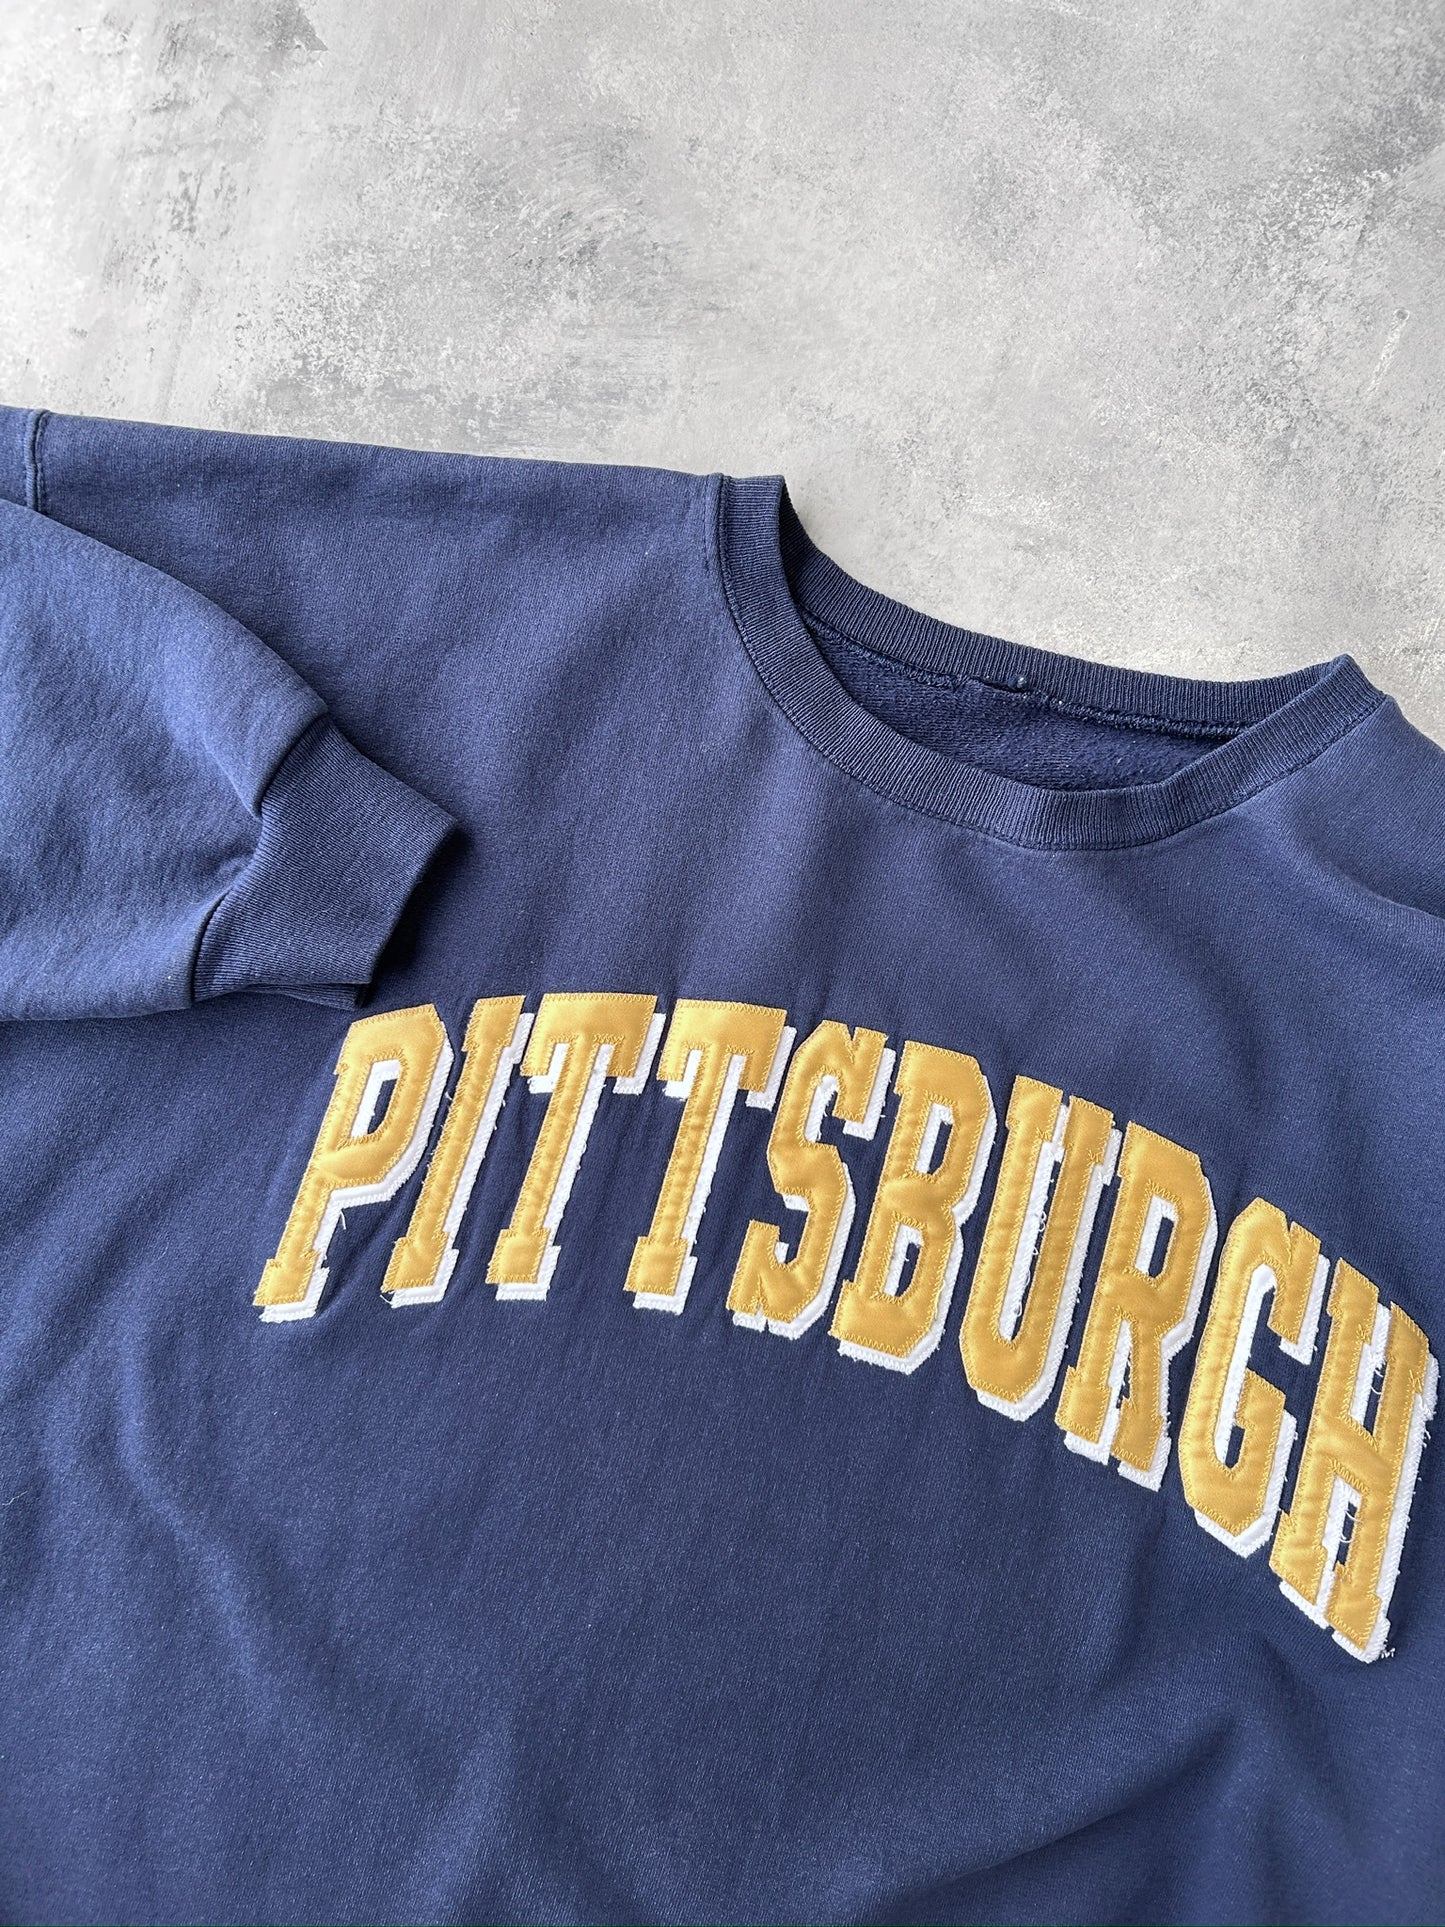 Pittsburgh University Sweatshirt 90's - XL